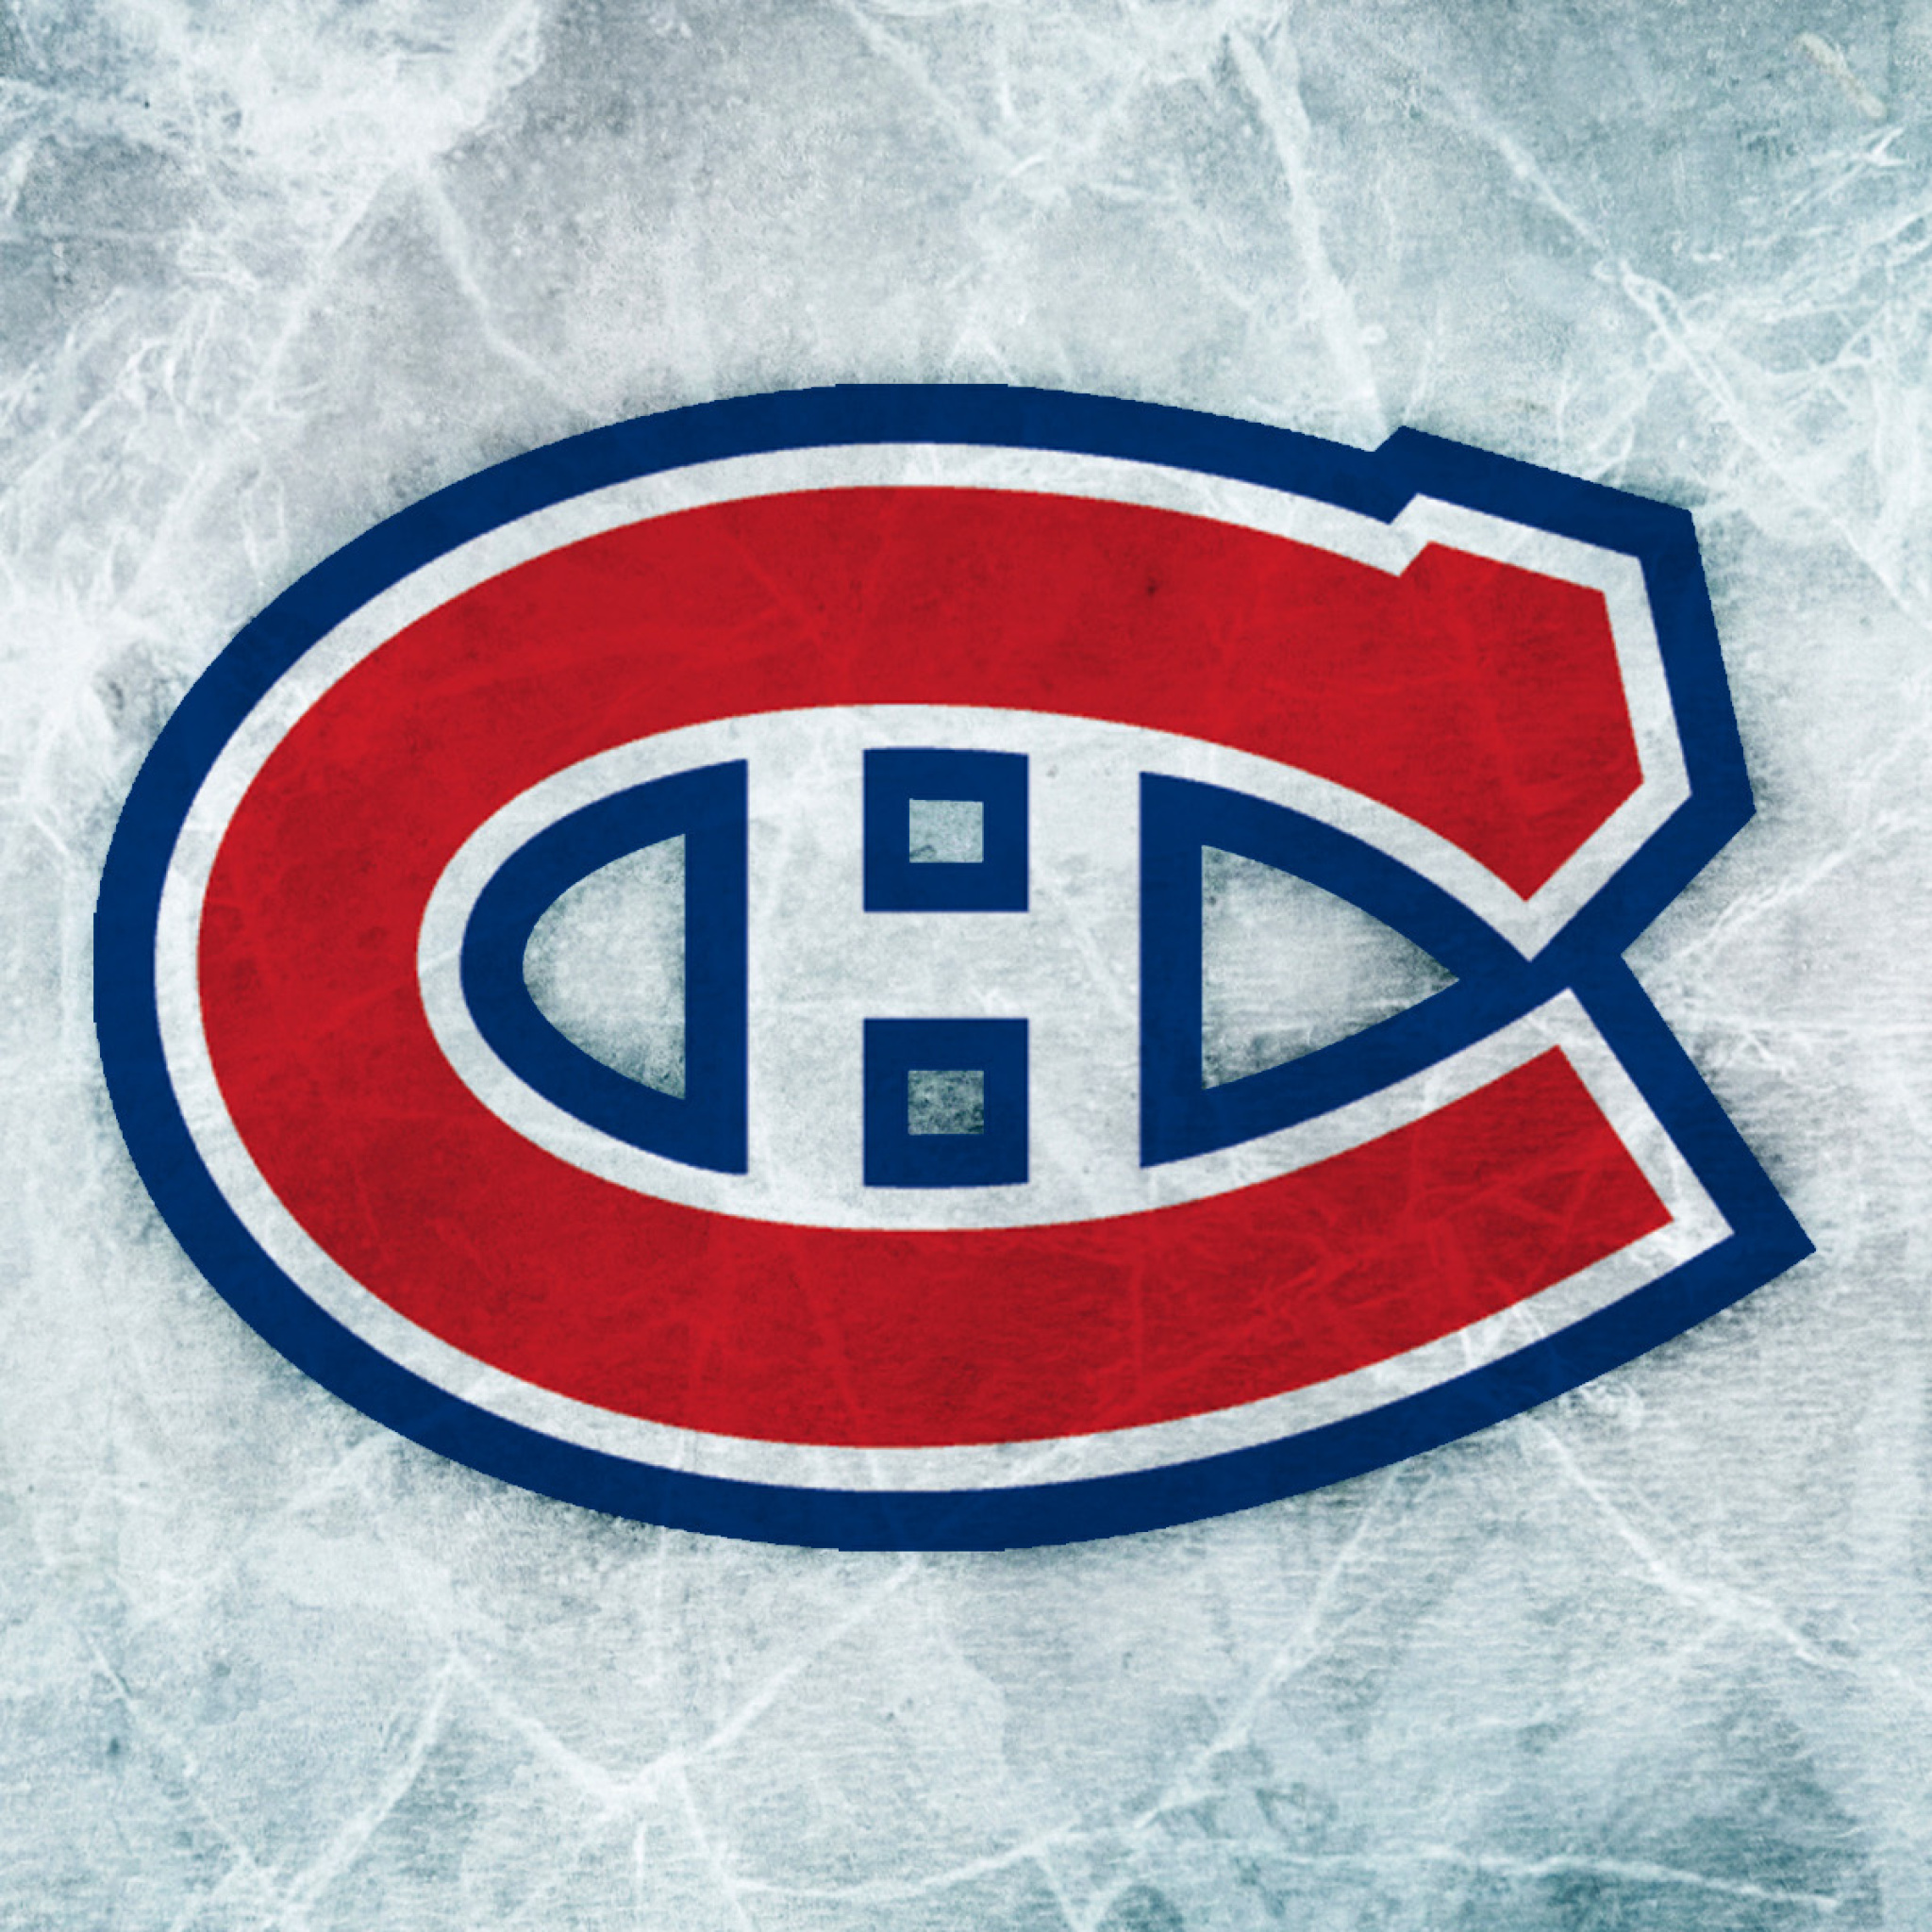 Montreal Canadiens wallpaper 2048x2048